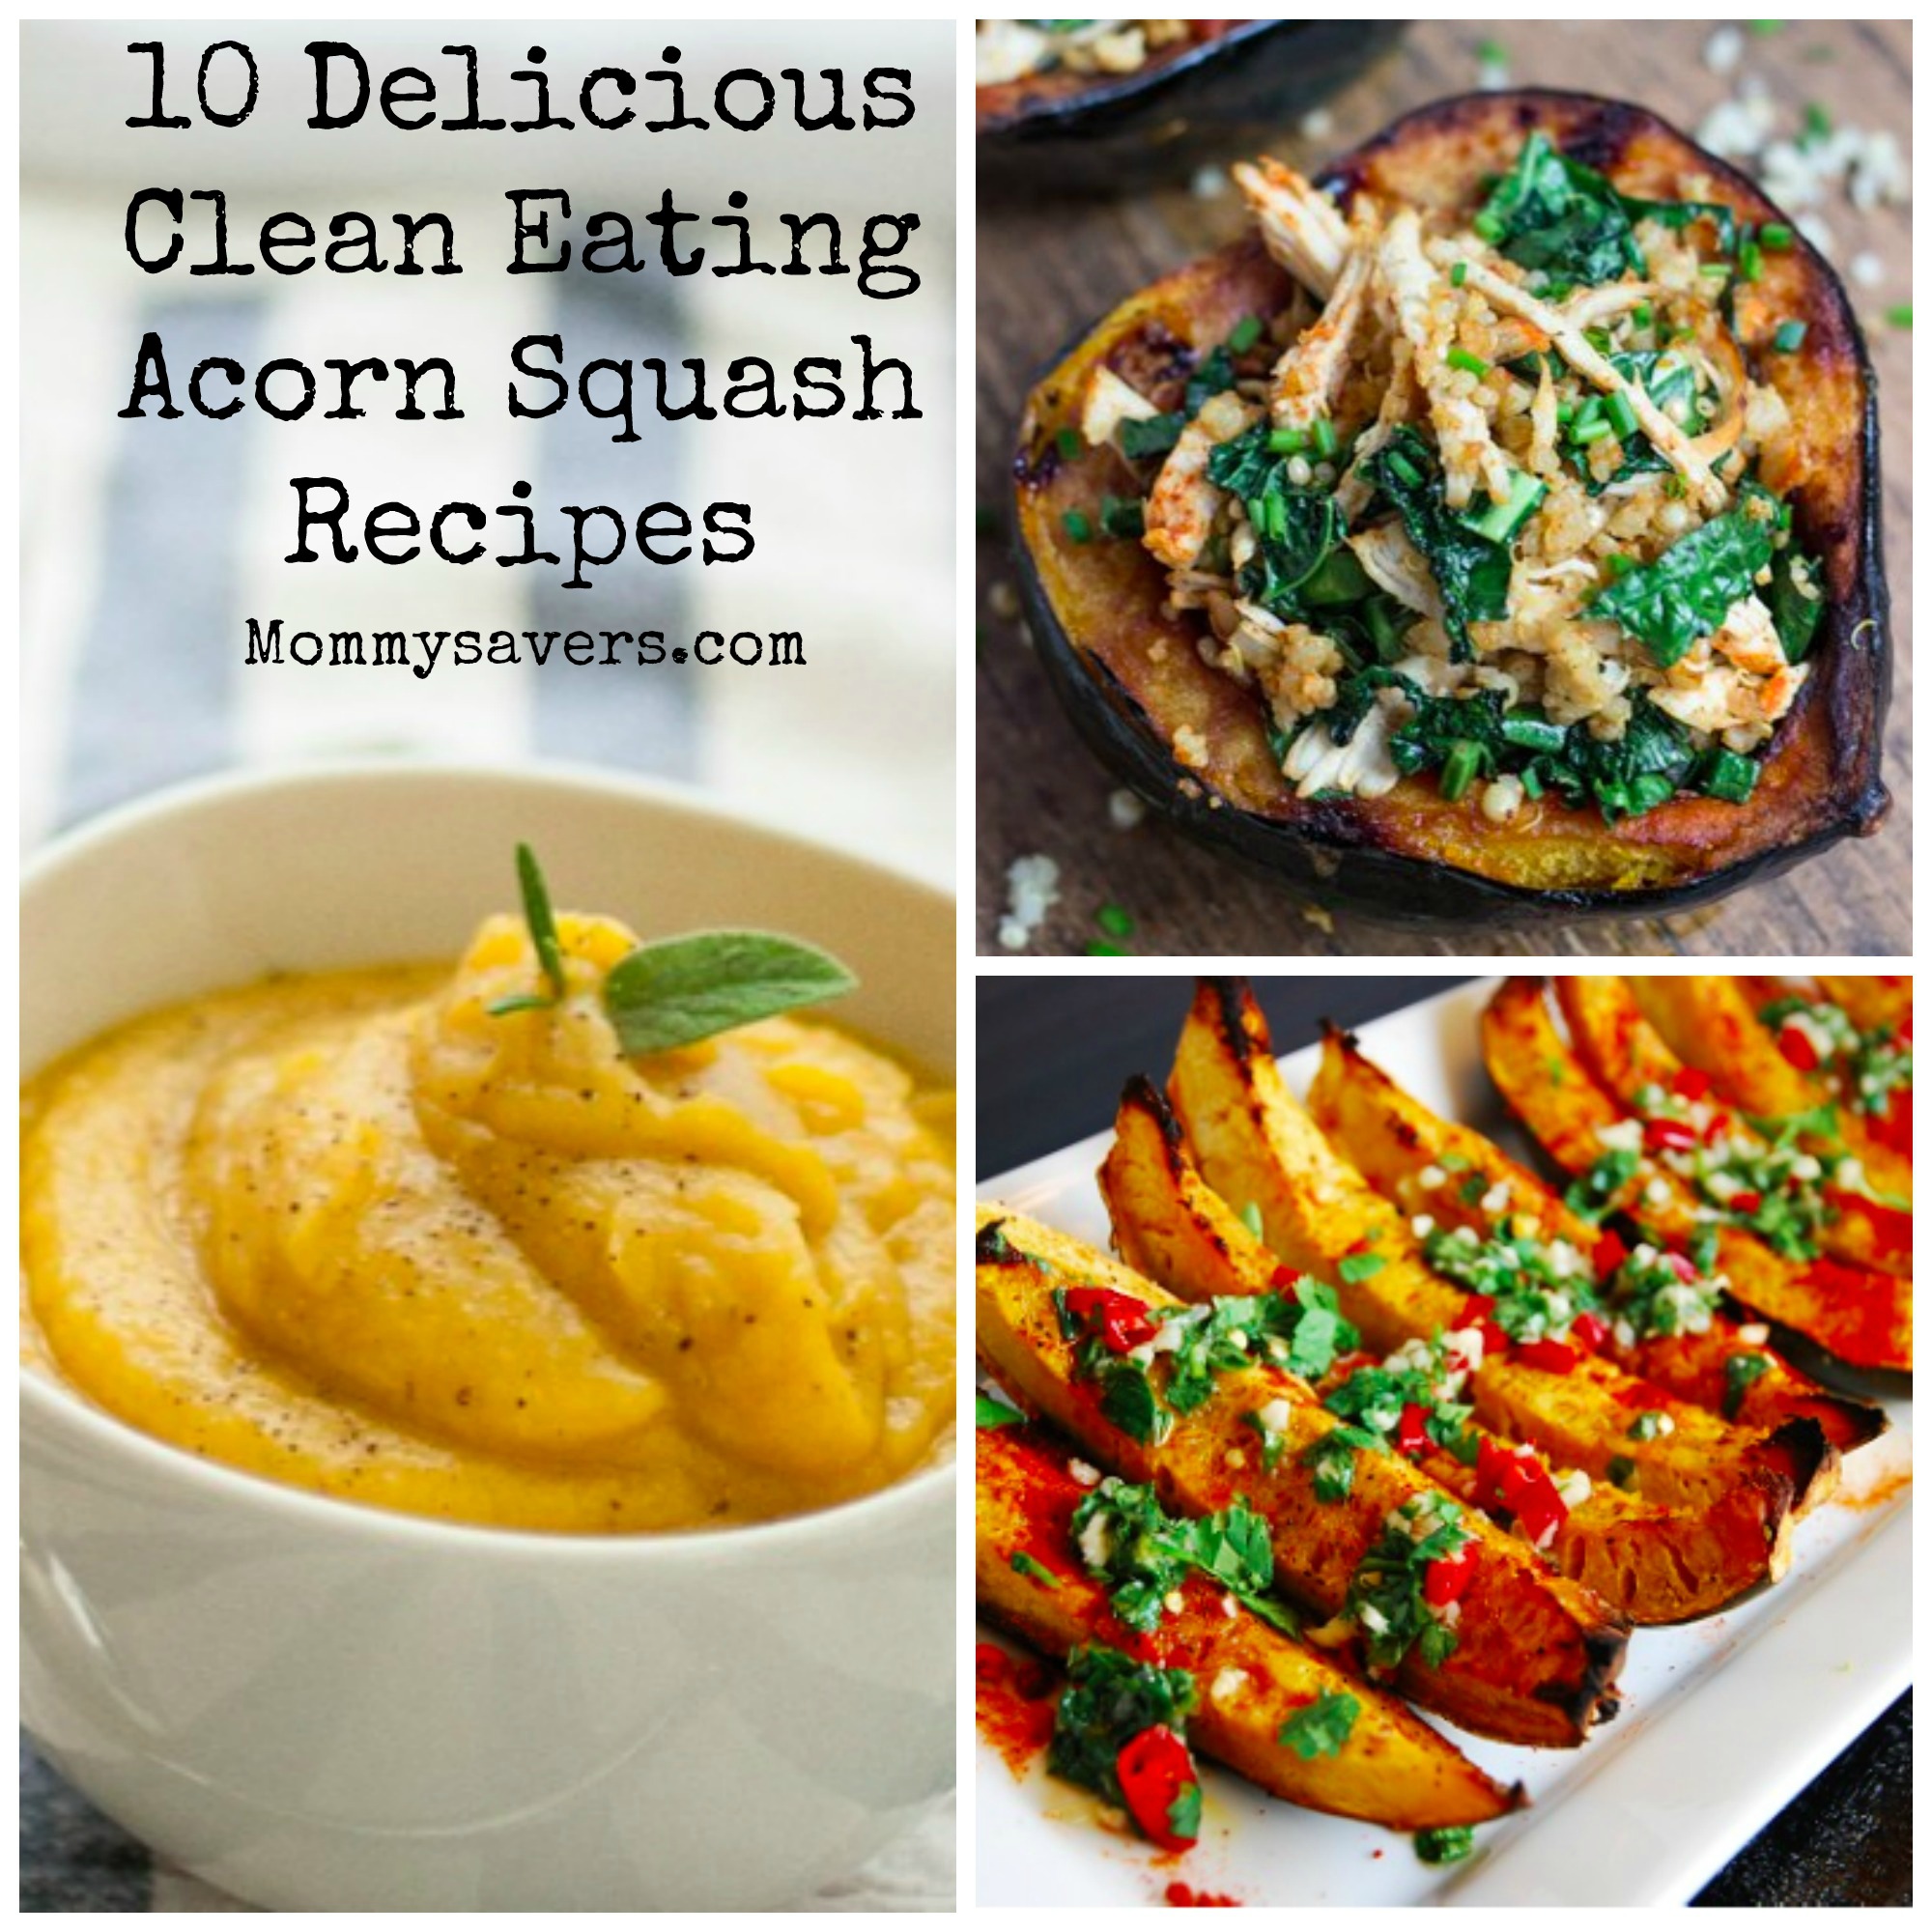 Clean Eating Acorn Squash Recipes